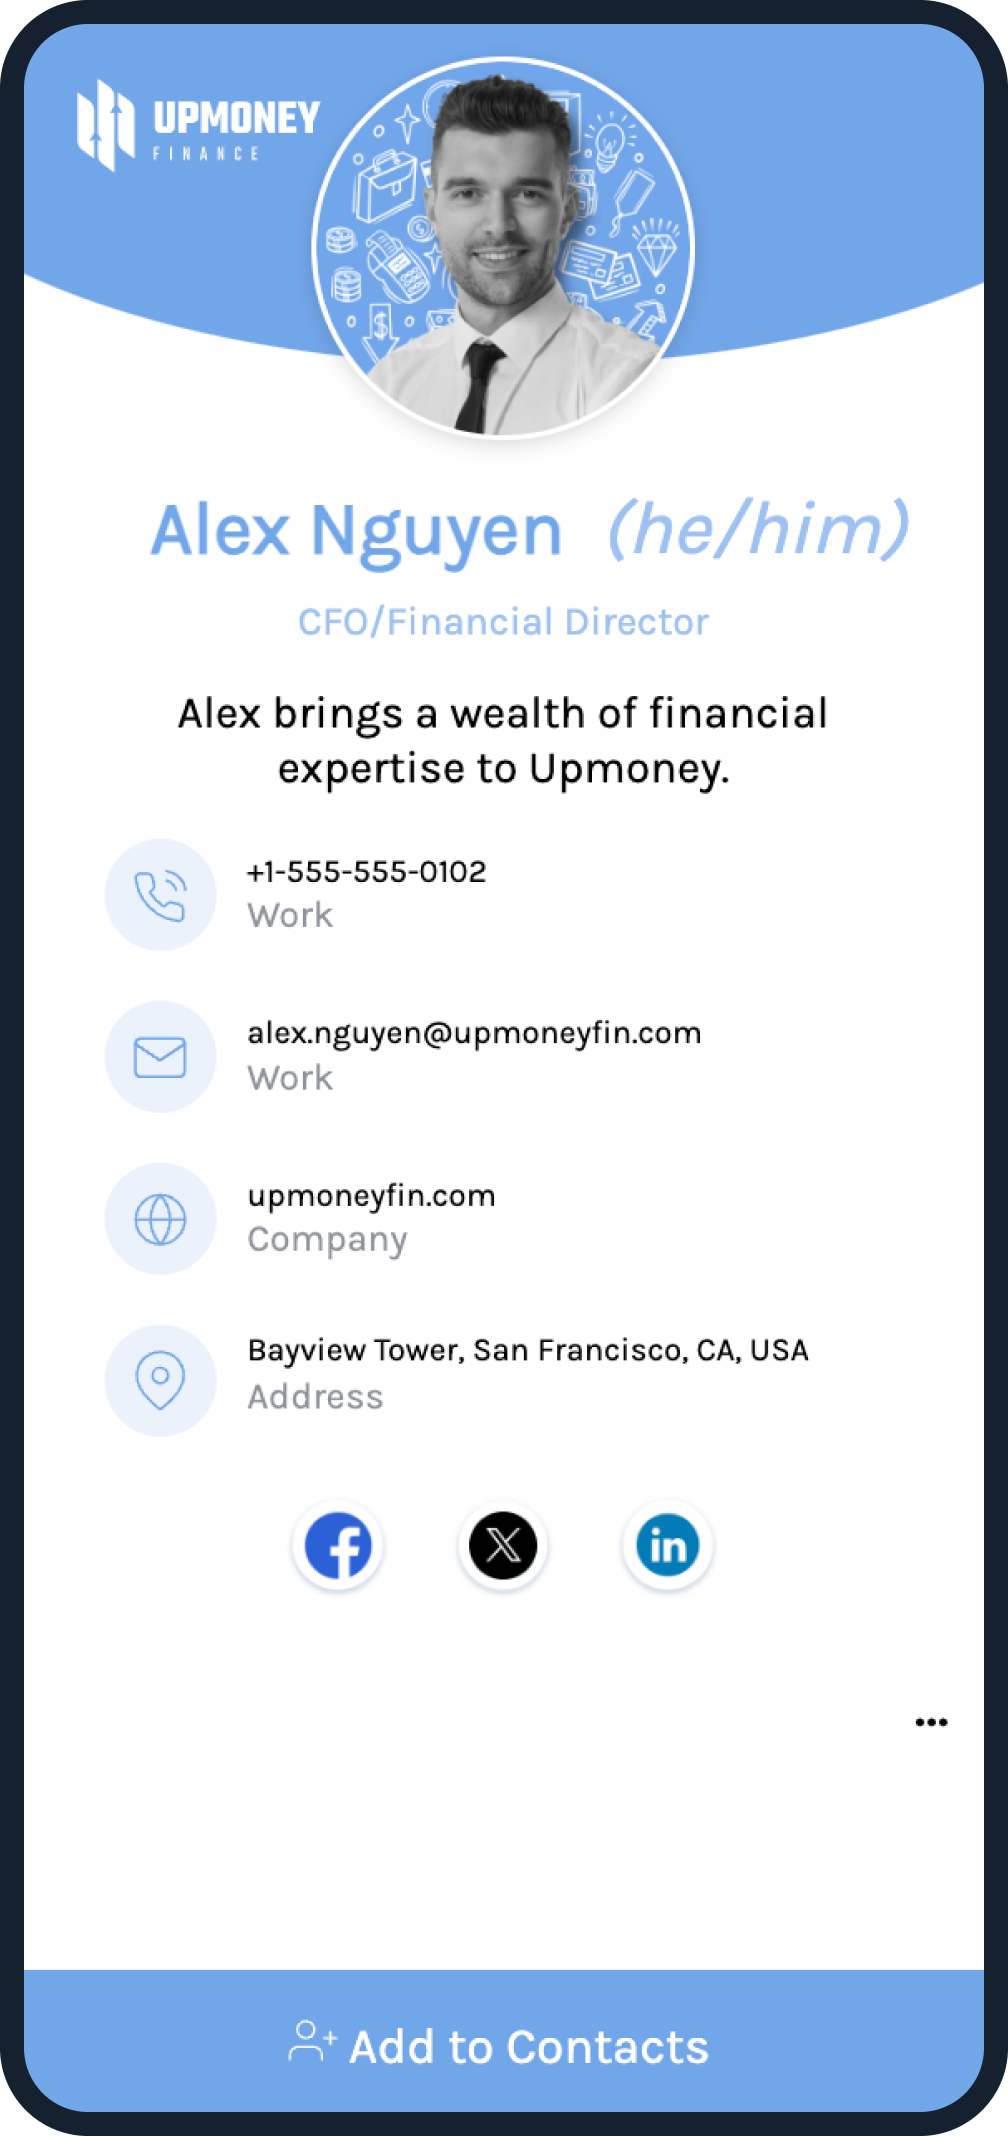 CFO/Financial Director